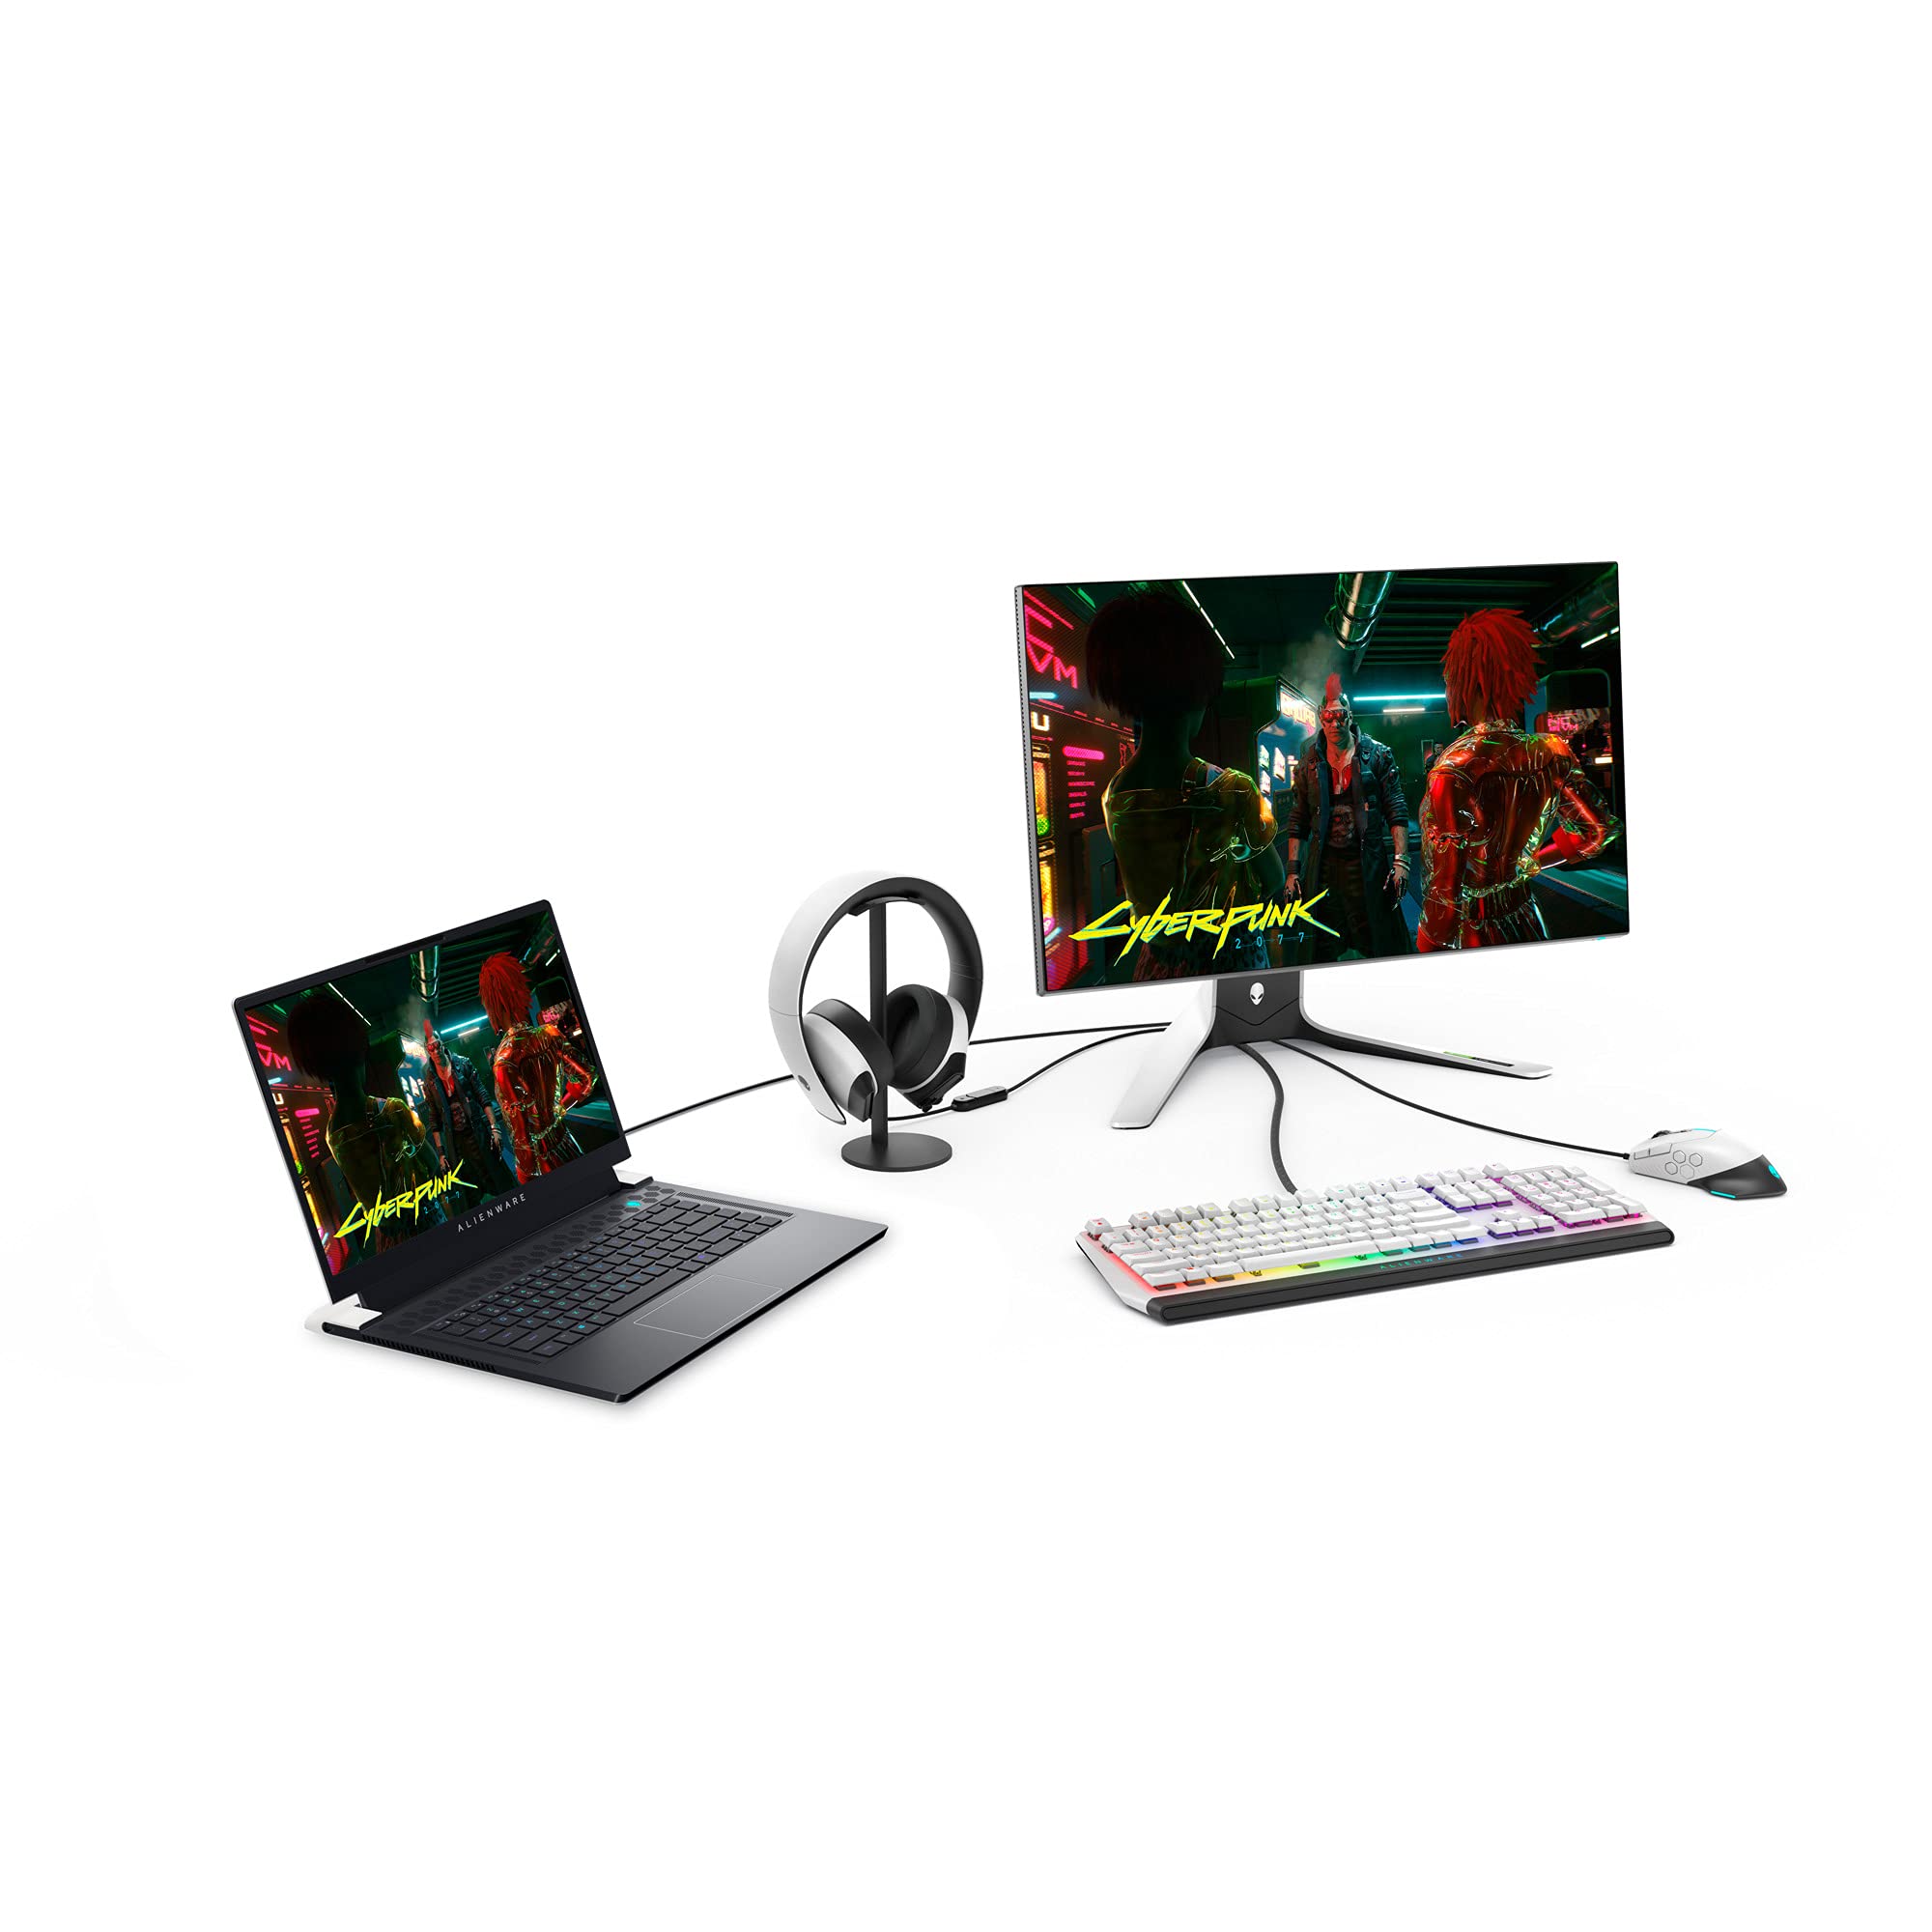 Alienware x15 R1 VR Ready Gaming Laptop - 15.6 inch FHD 360Hz Display, Intel Core i7-11800H, 16GB DDR4 RAM, 1TB SSD, HDMI, WiFi, NVIDIA GeForce RTX 3070 8GB GDDR6, Windows 11 Home - White